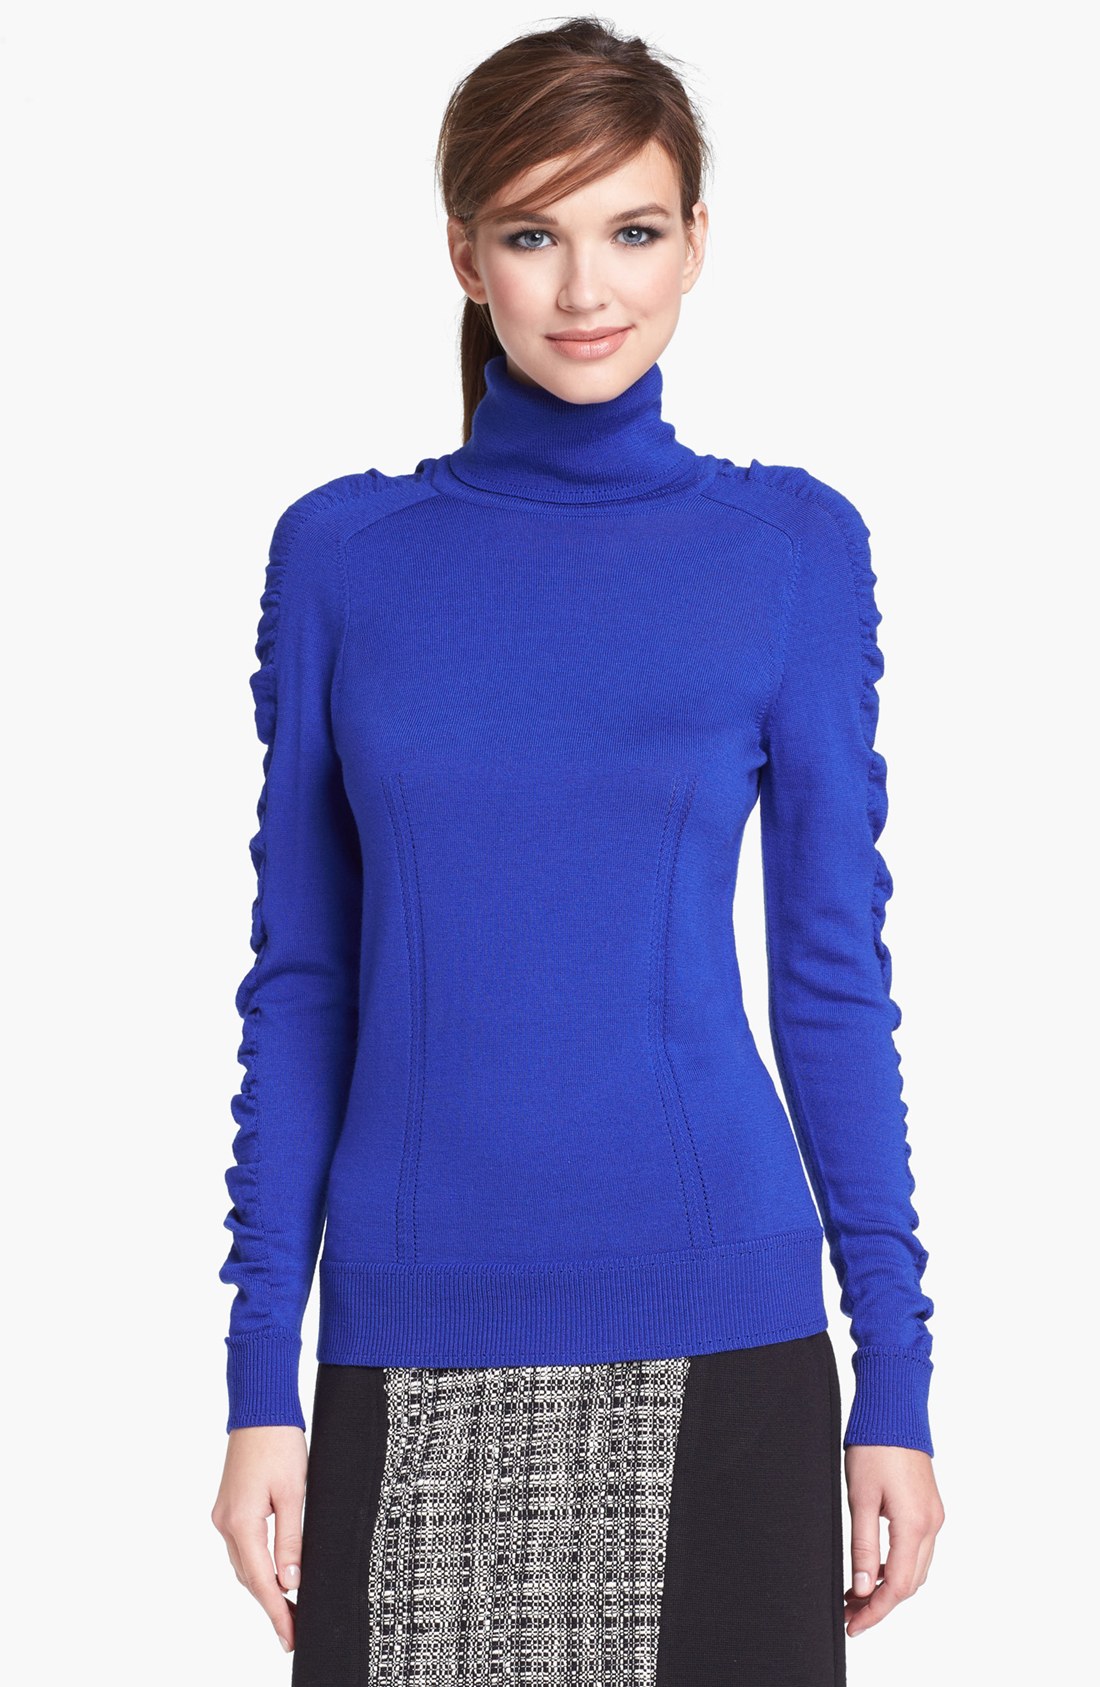 Milly Merino Wool Turtleneck Sweater in Blue (Cobalt) | Lyst